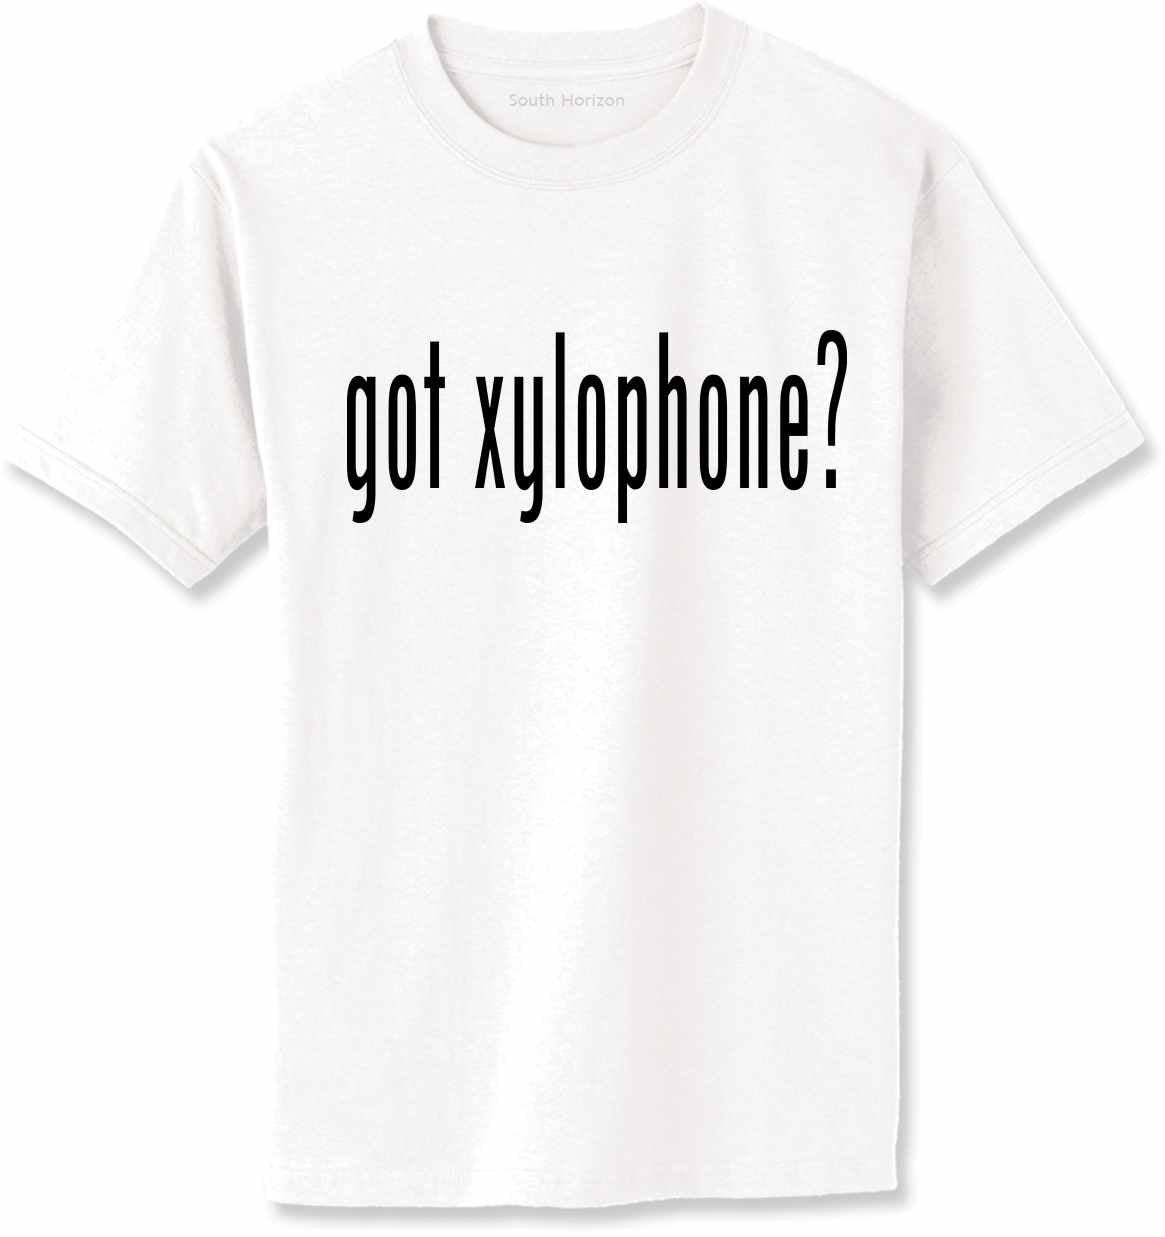 Got Xylophone? Adult T-Shirt (#899-1)